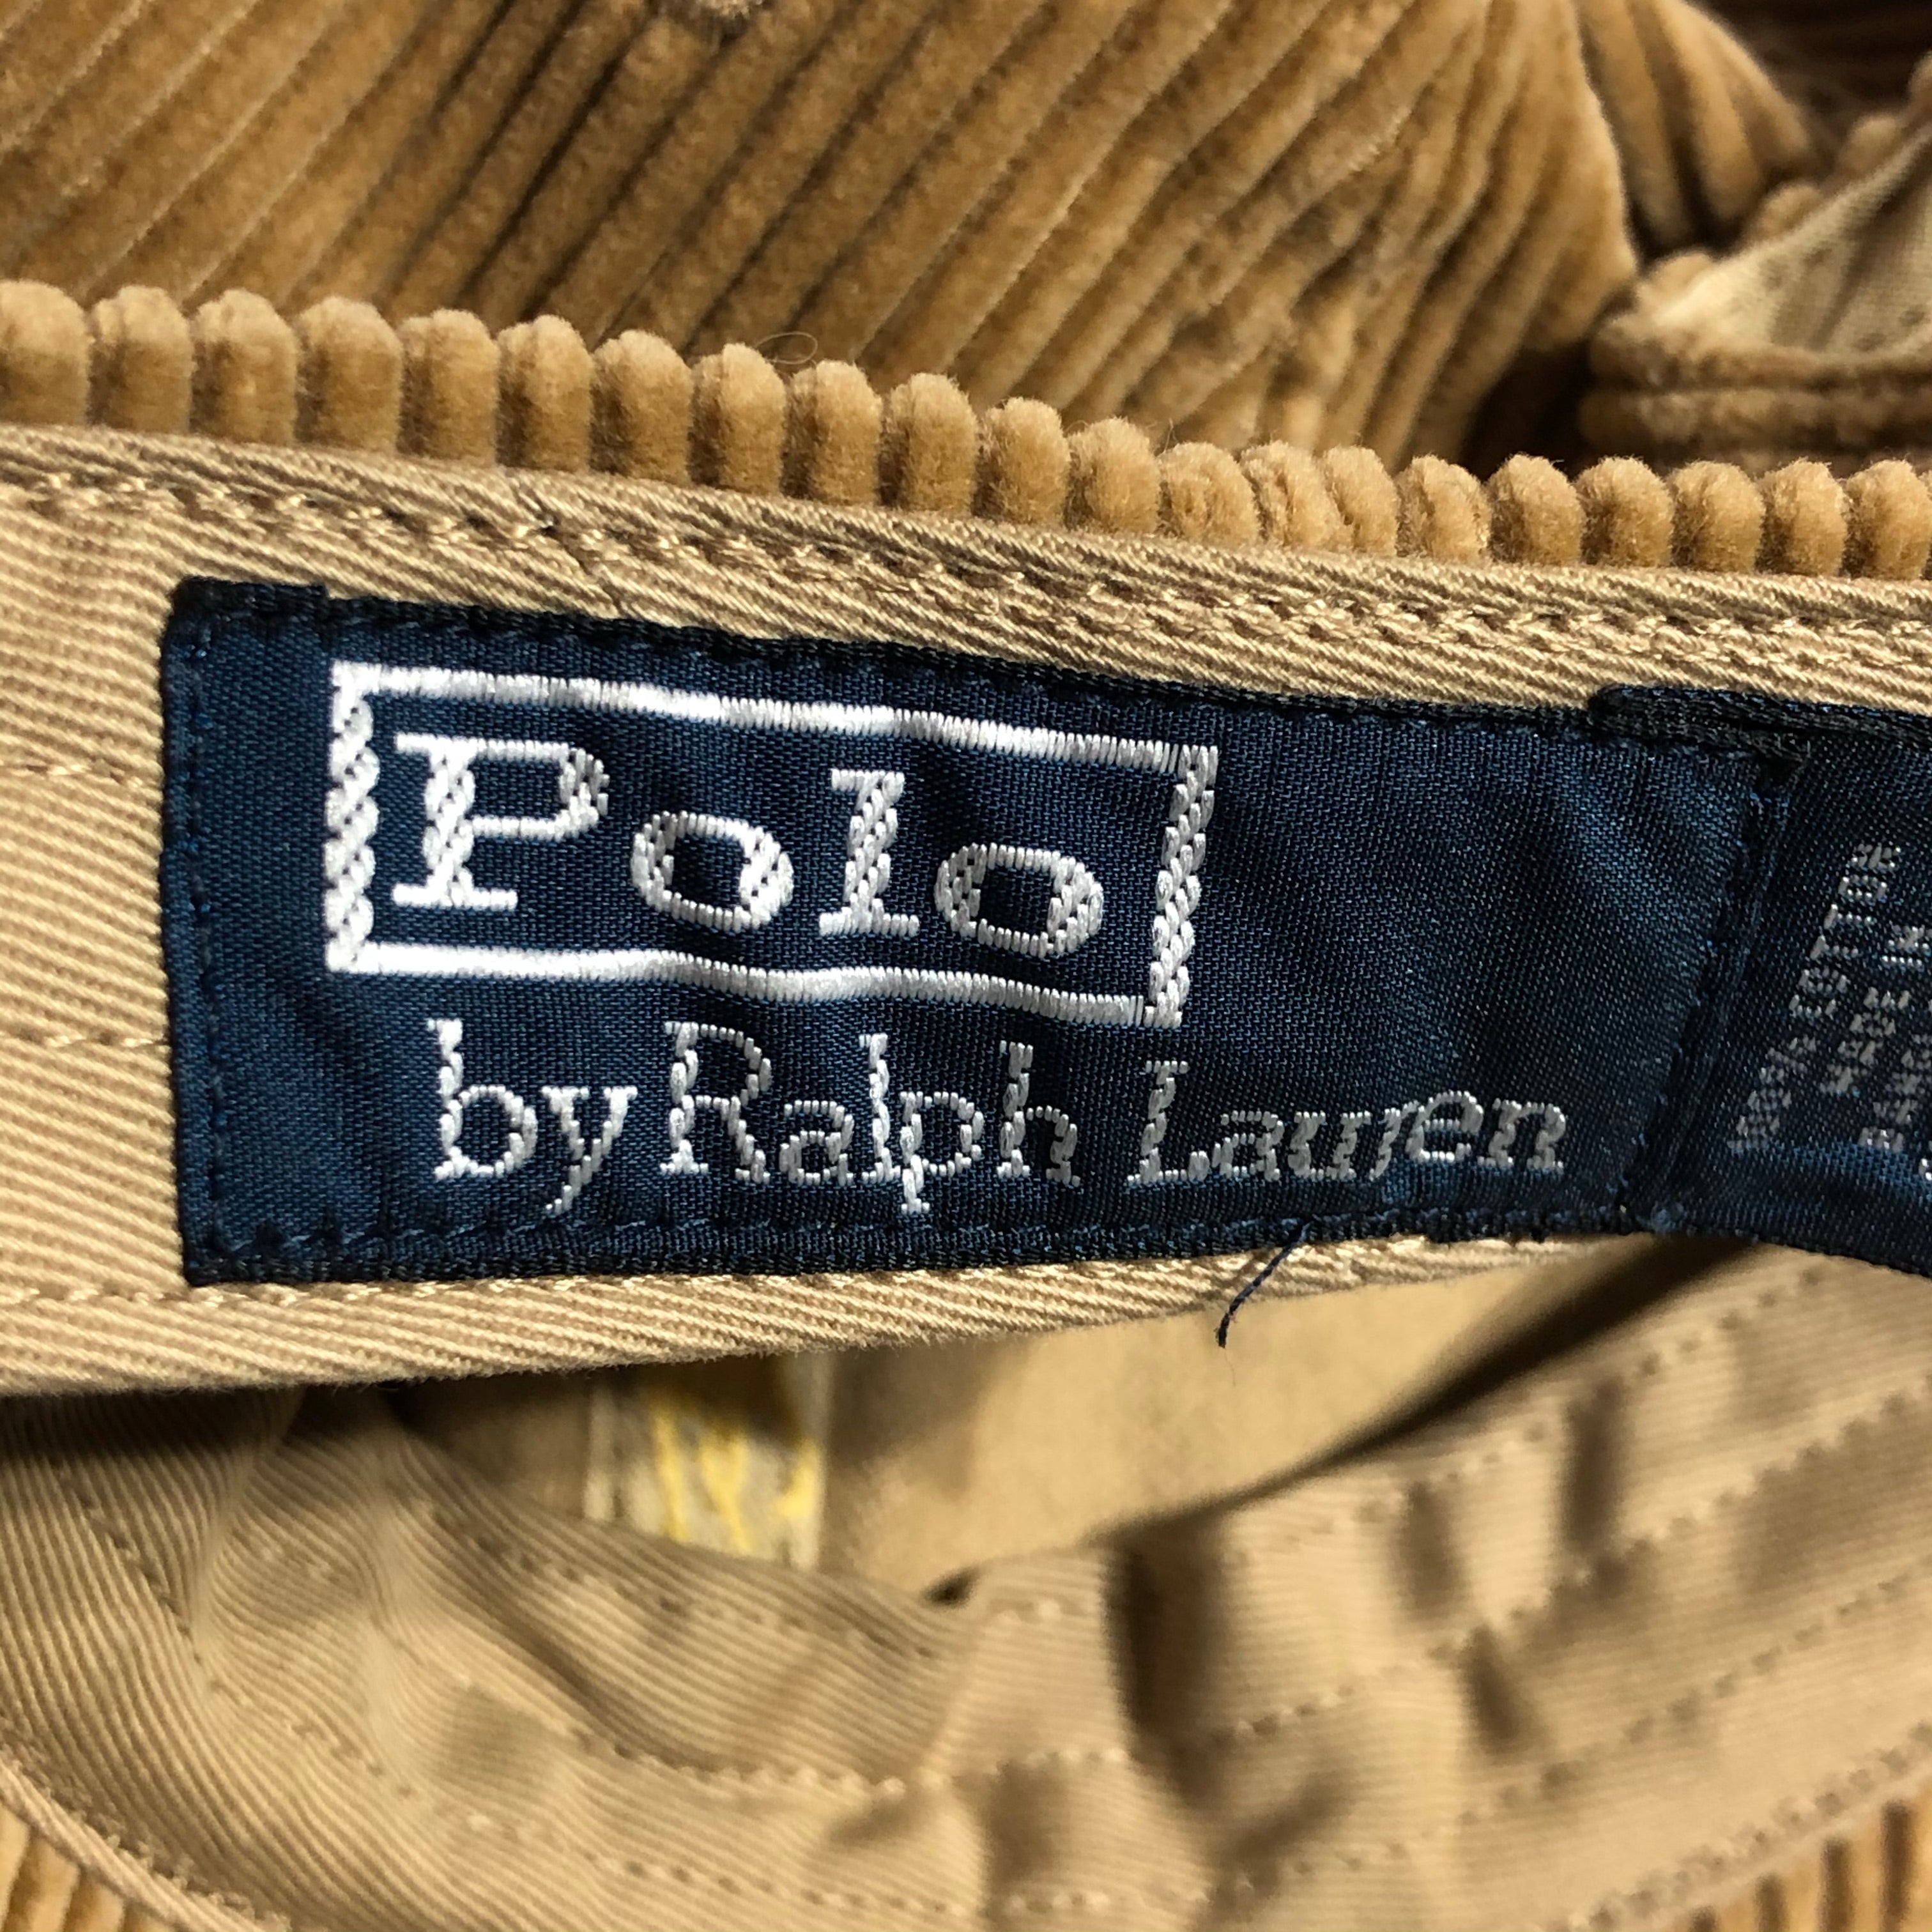 Vintage Polo Strapback